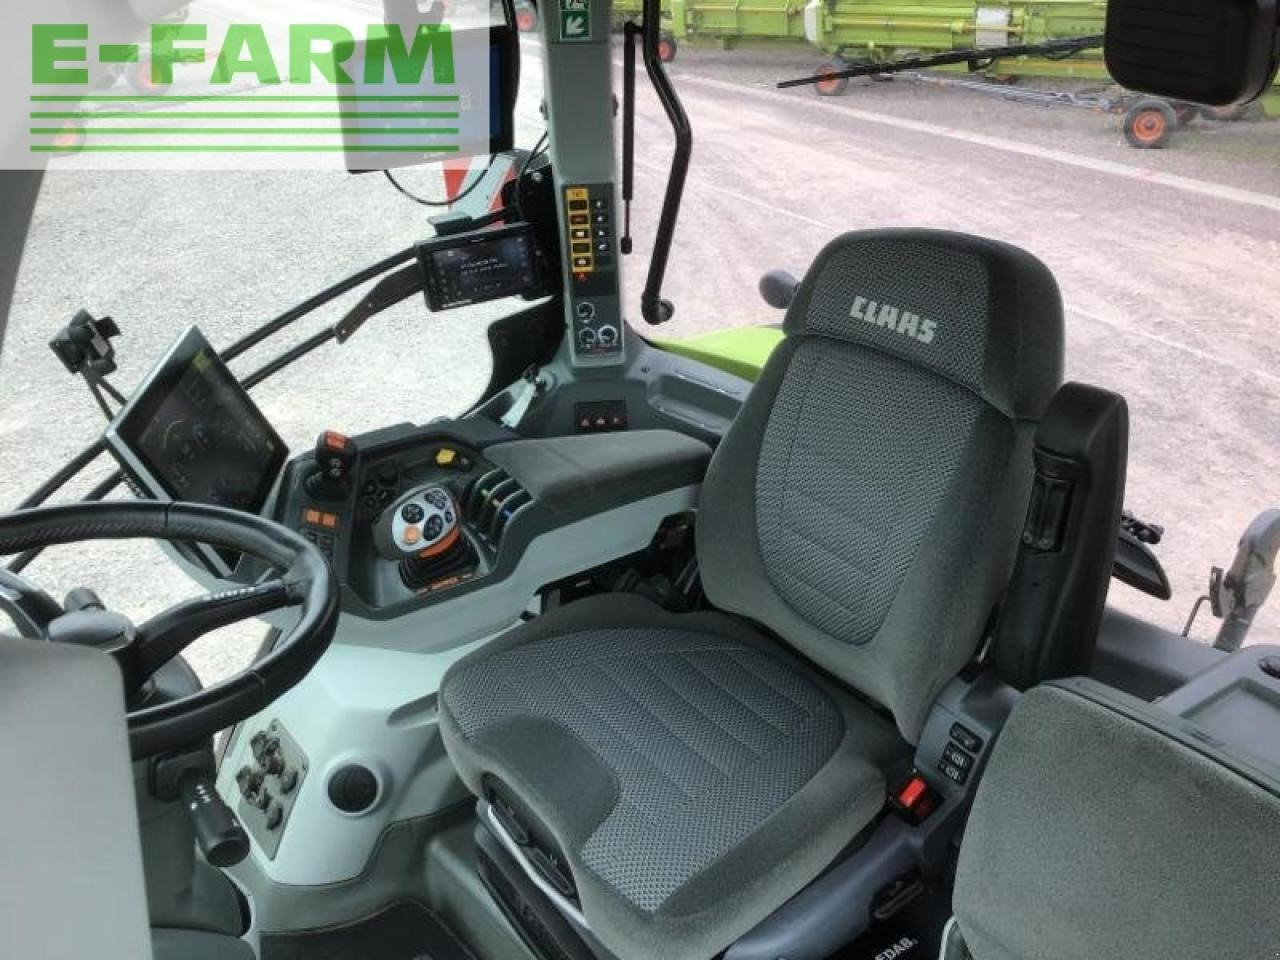 Farm tractor CLAAS axion 960 terra trac